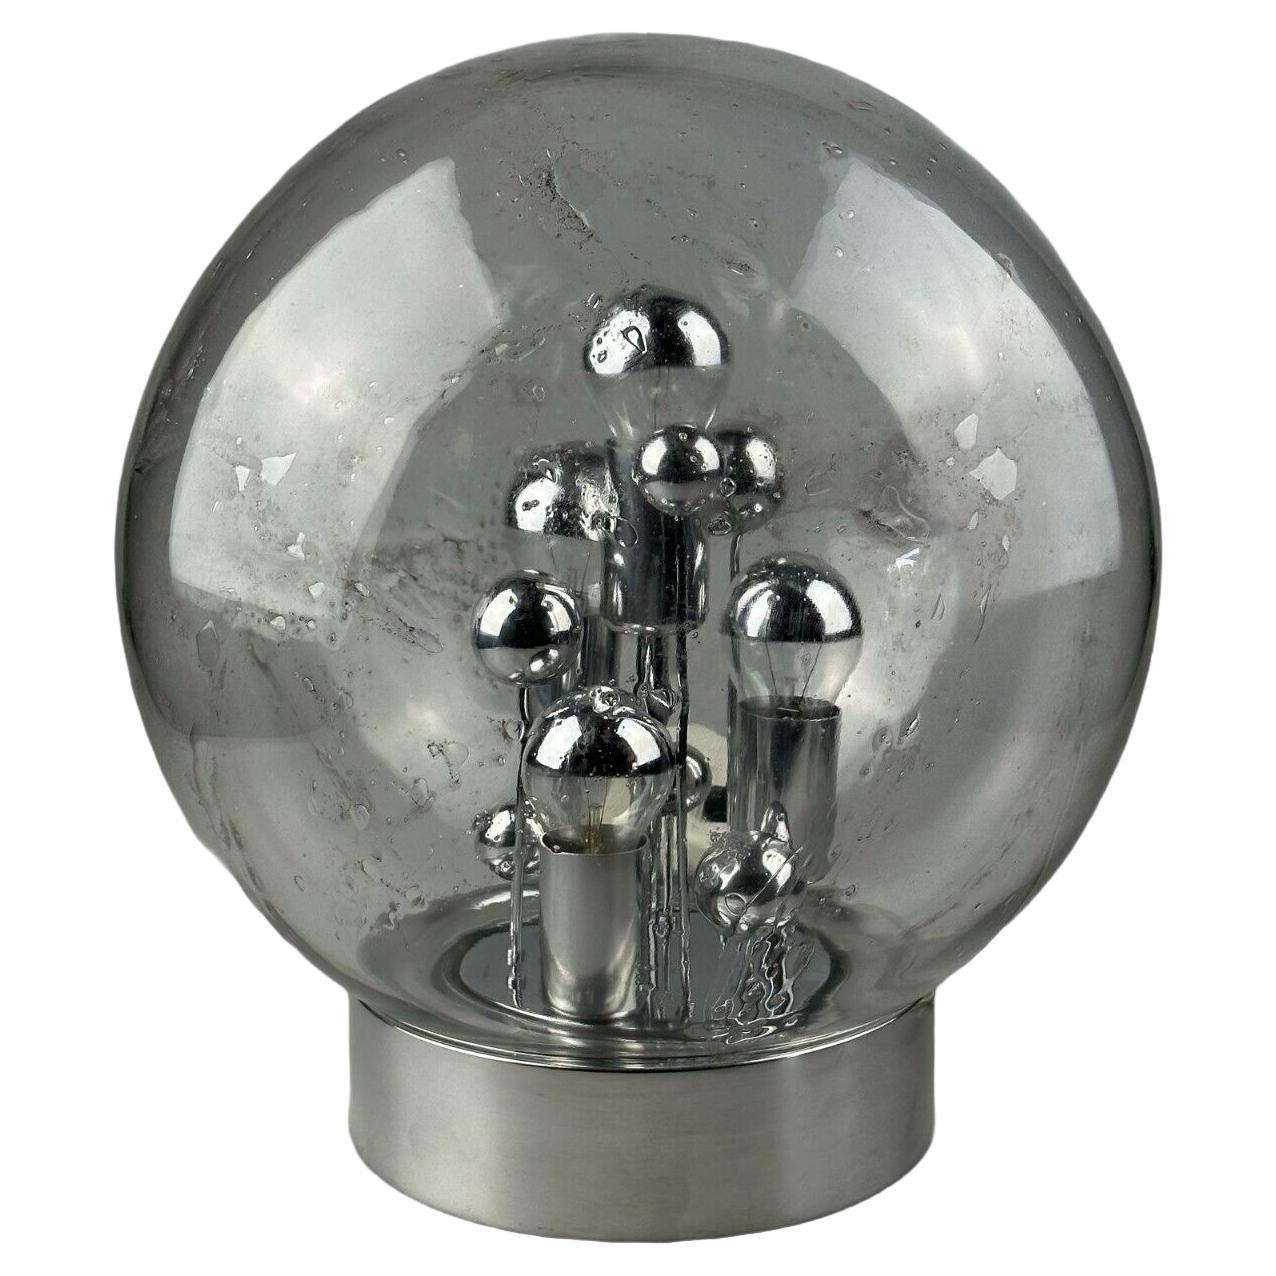 60s 70s table lamp ball lamp Doria "Big Ball" glass space age design